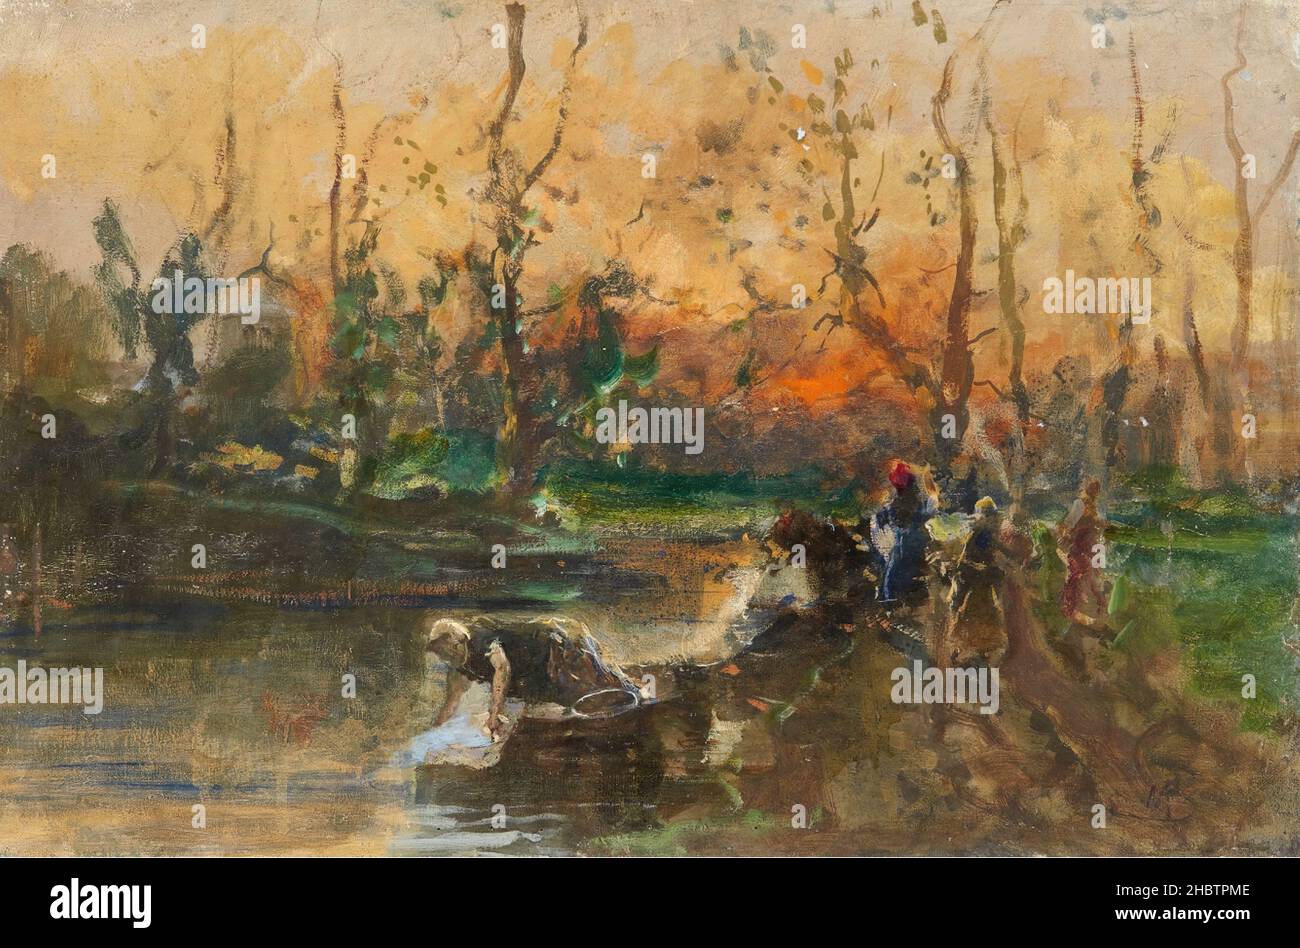 Bianchi Mosè - Privatsammlung - Lavandaie sulla riva del fiume - unbekanntes Datum - Öl auf Leinwand 33 x 50 cm - Stockfoto